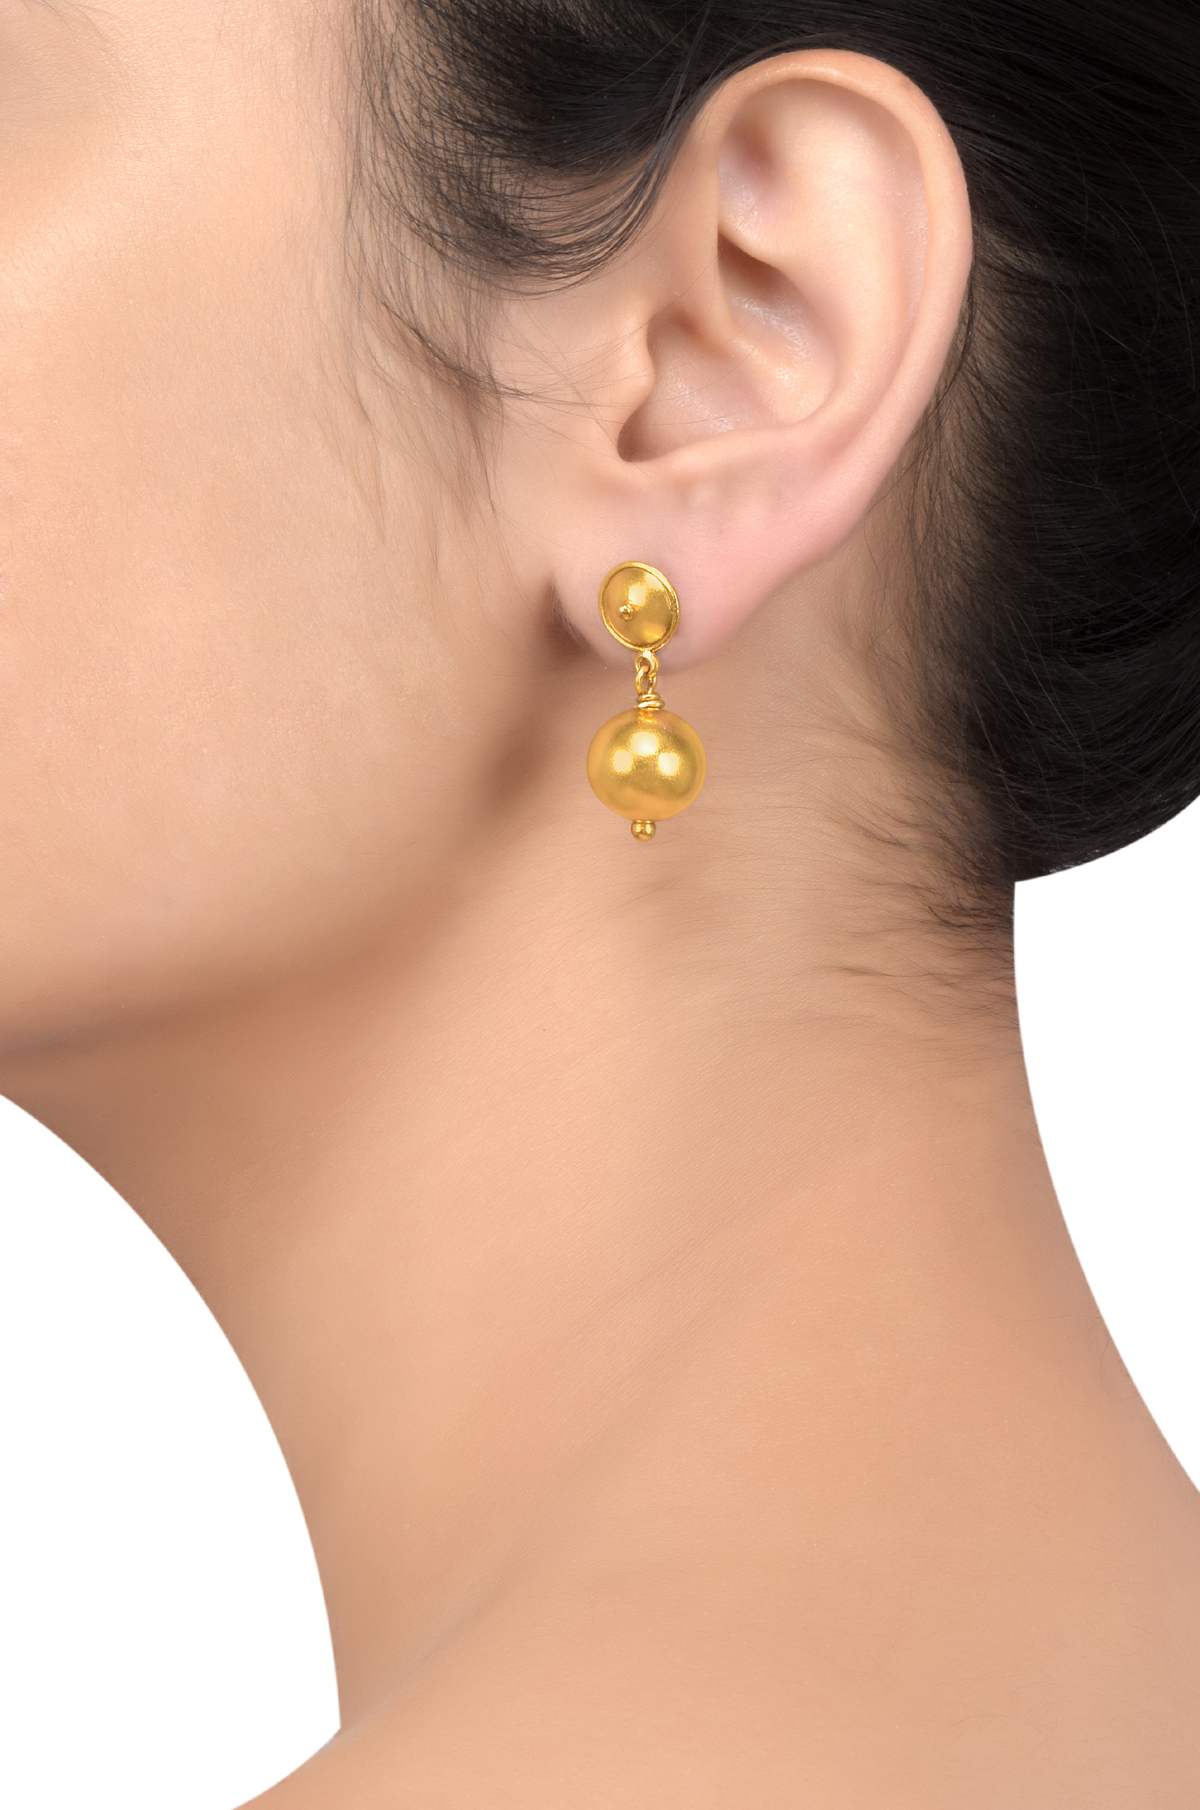 Buy Gold Ball Earrings Modern Earrings Tiny Gold Earrings Online in India   Etsy